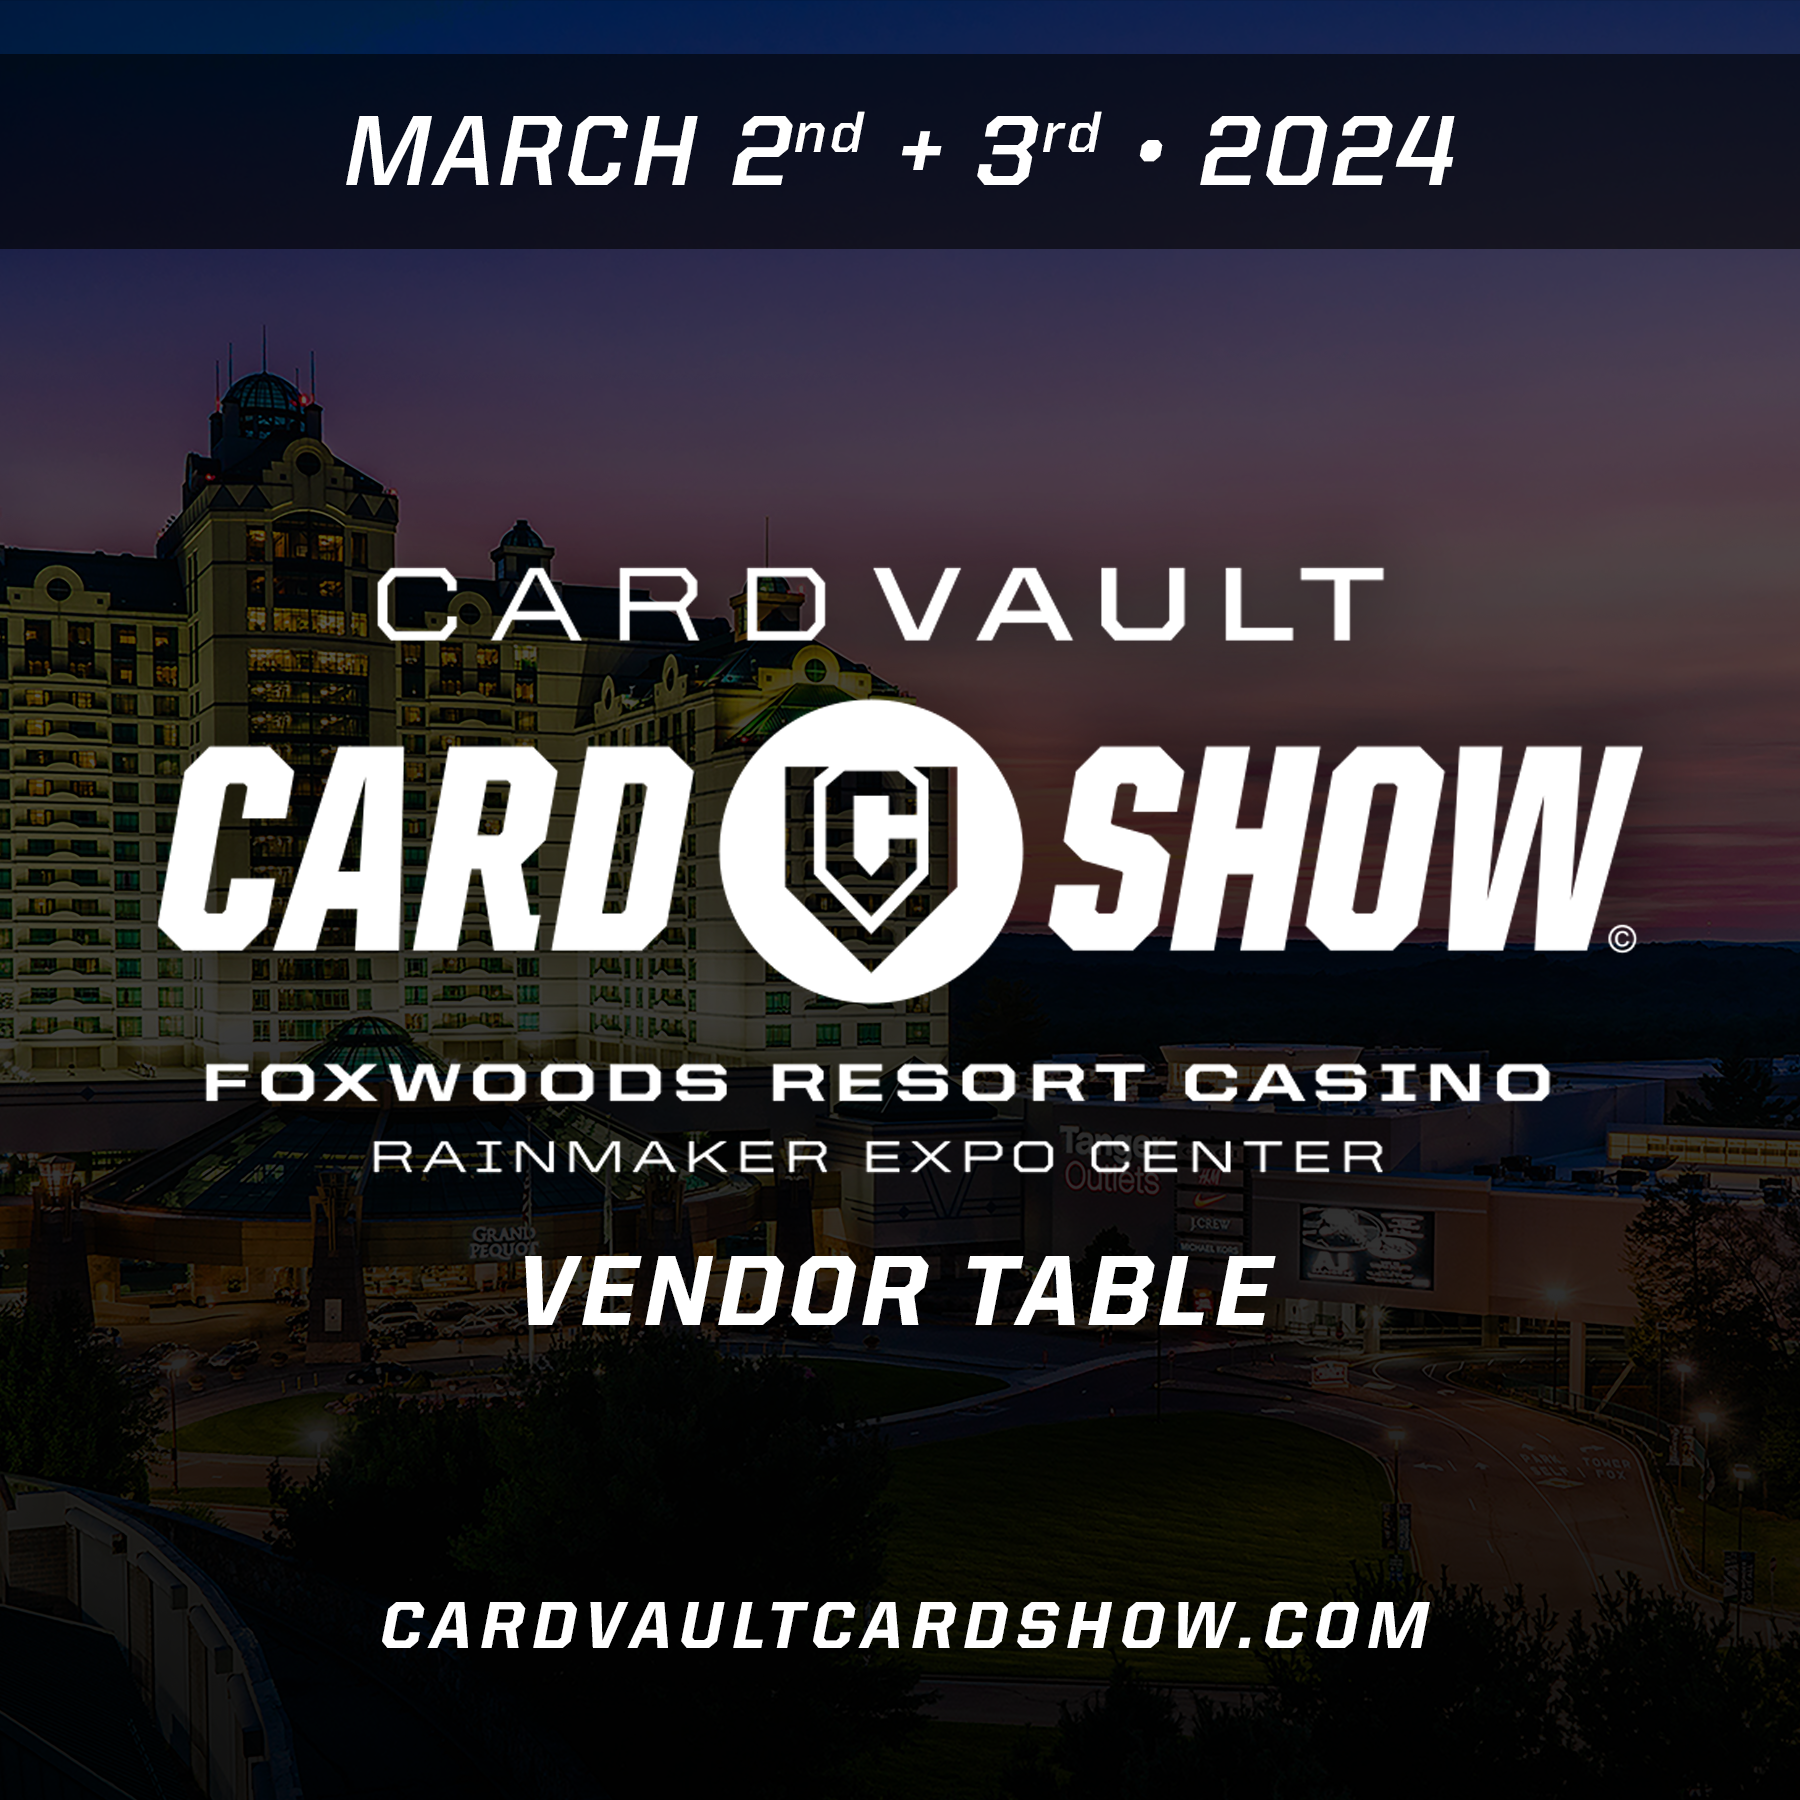 CardVault Card Show @ Foxwoods Vendor Table